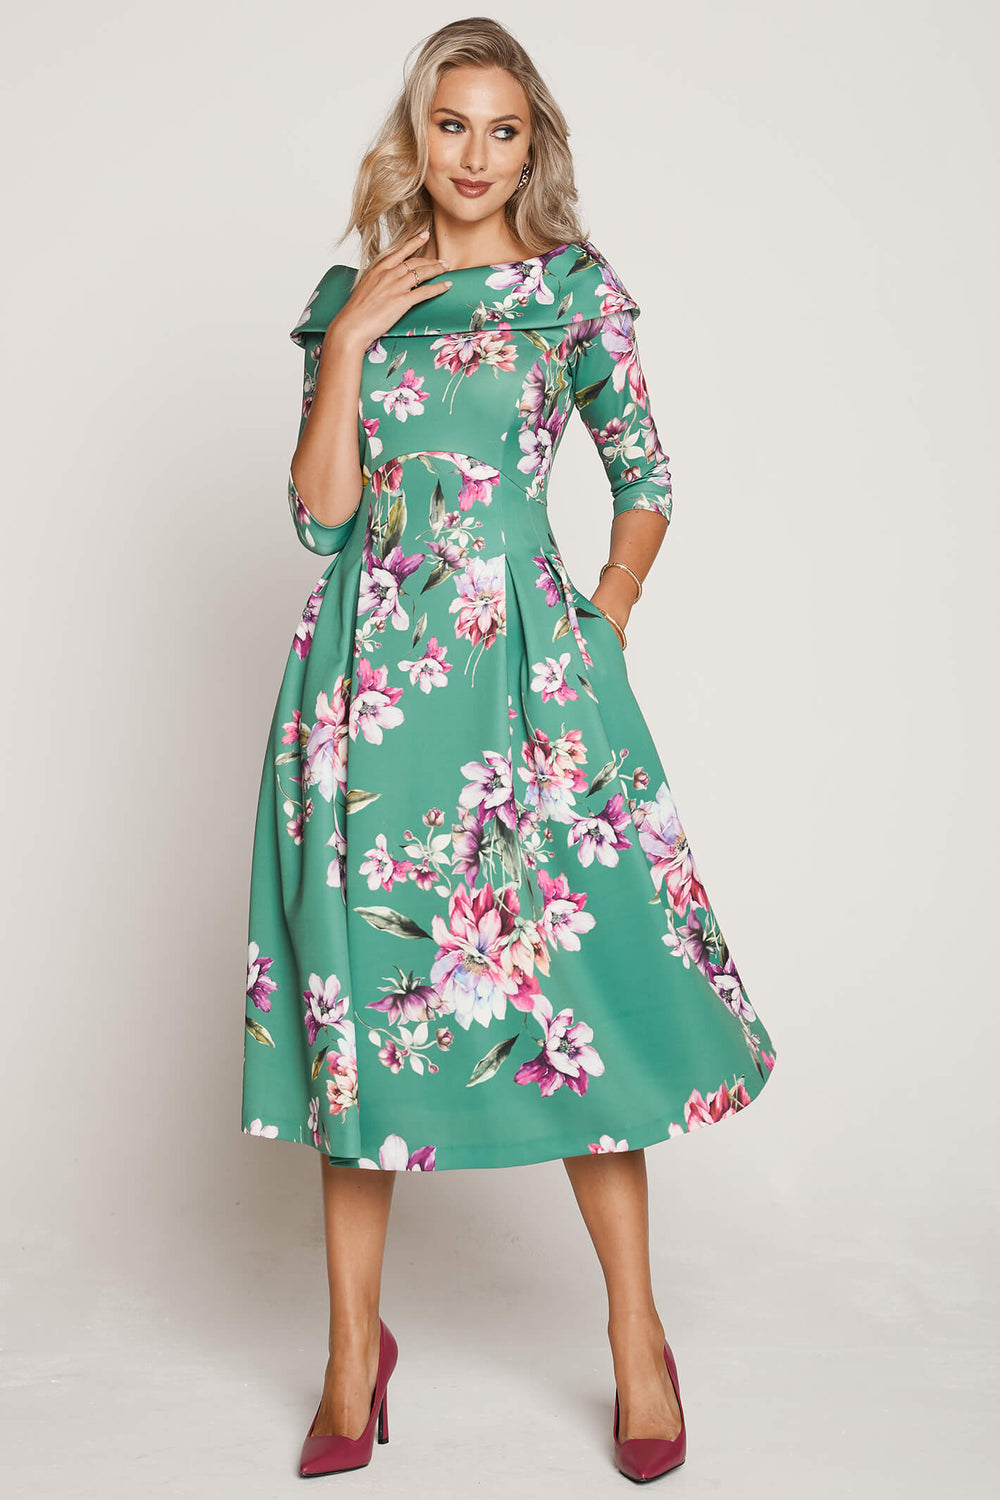 Tia 78694-7738 80 Jade Green Floral Print Occasion Dress - Dotique